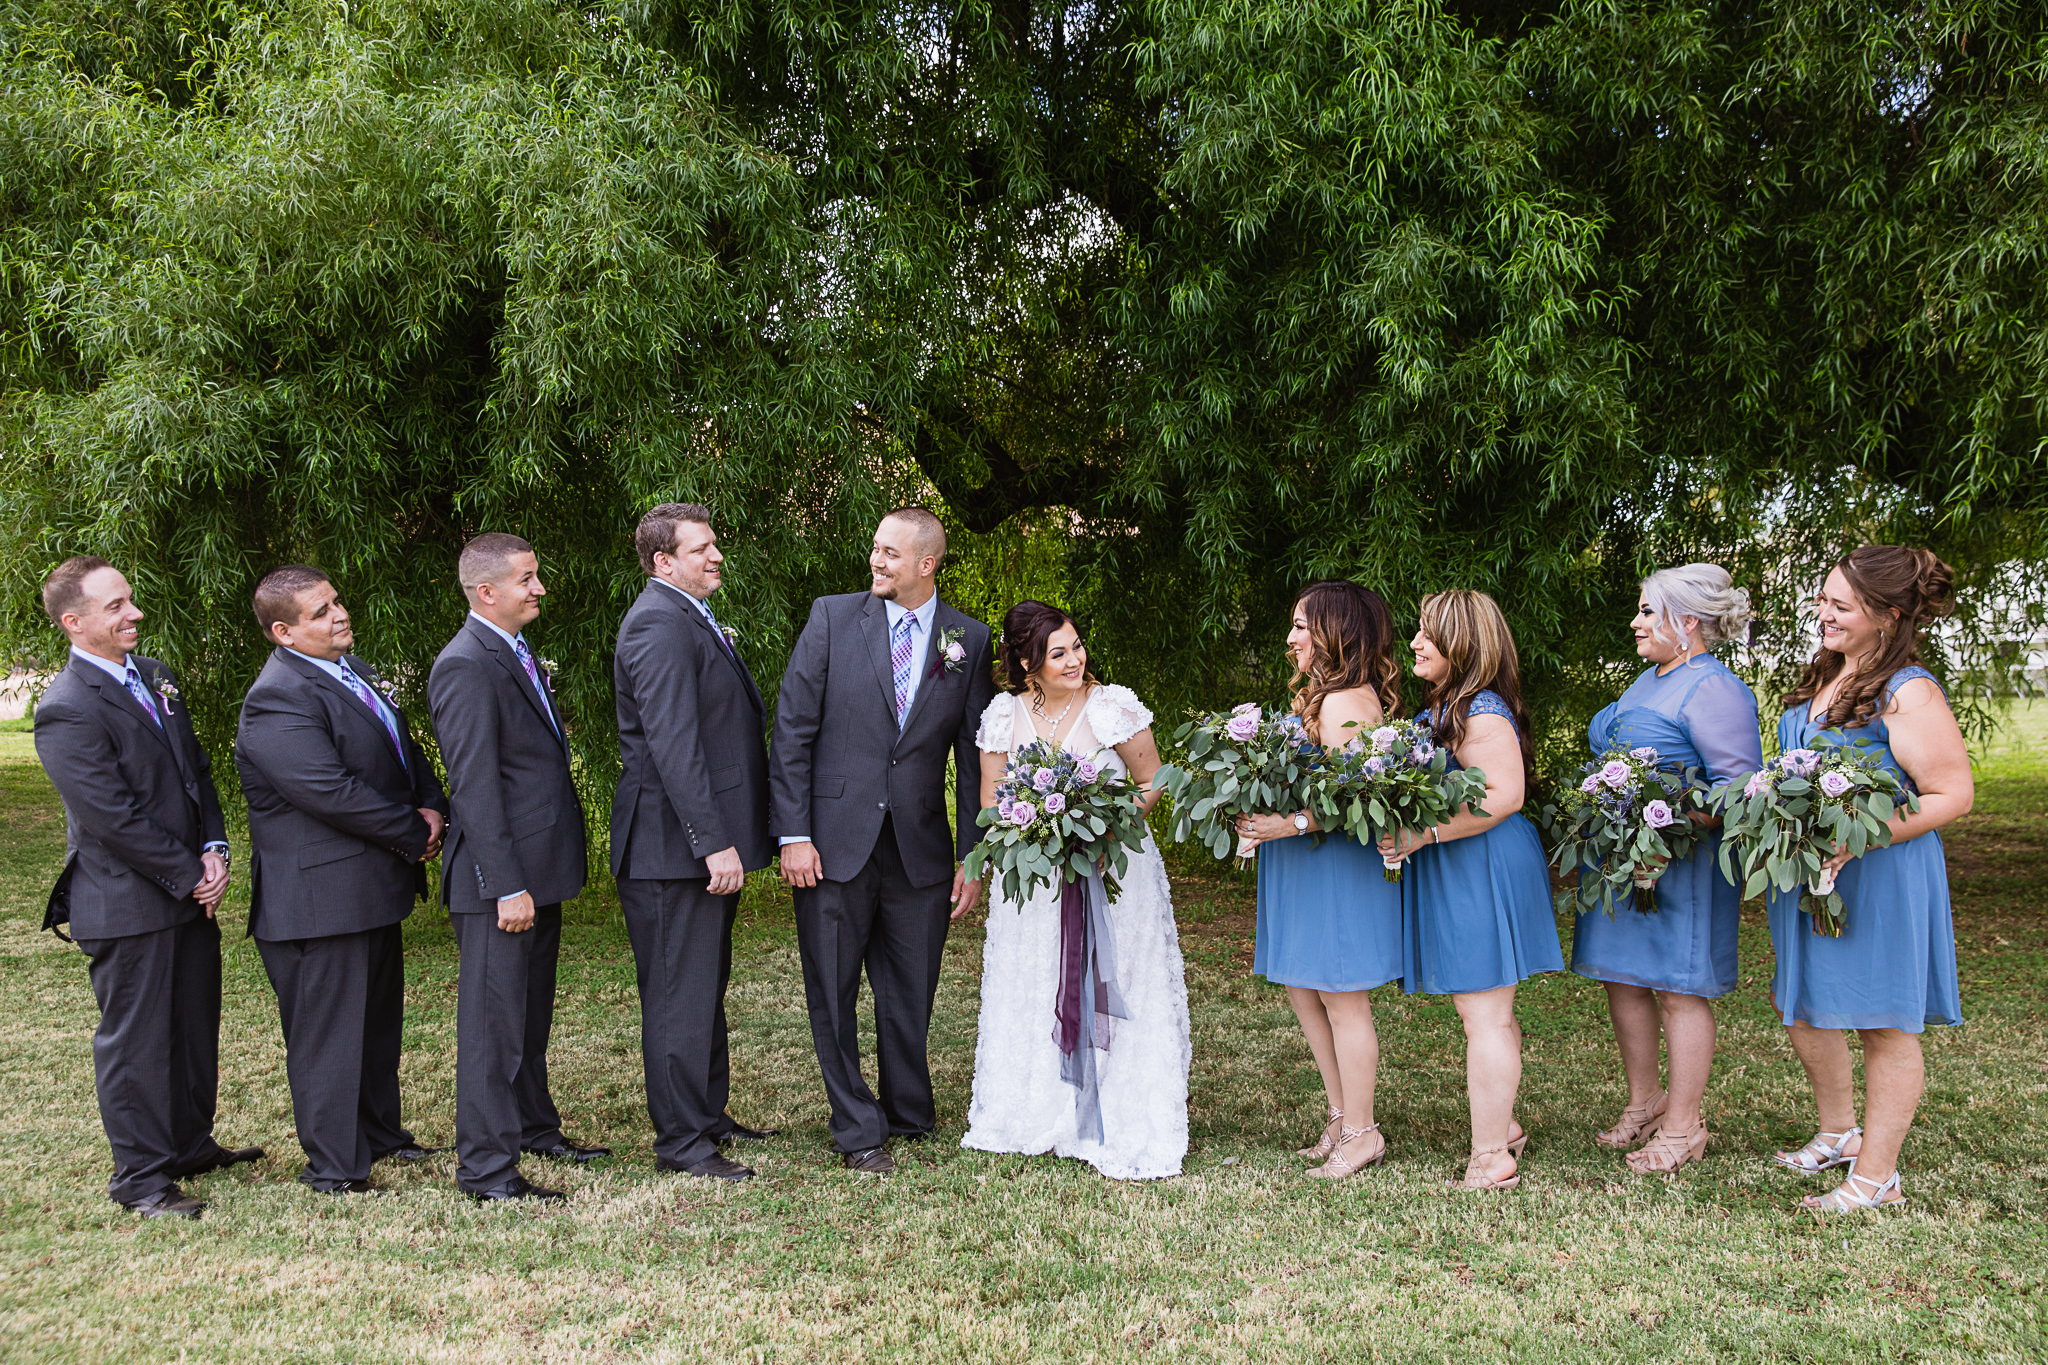 Dusty blue and lavender bridal party by Arizona wedding photographer PMA Photography.